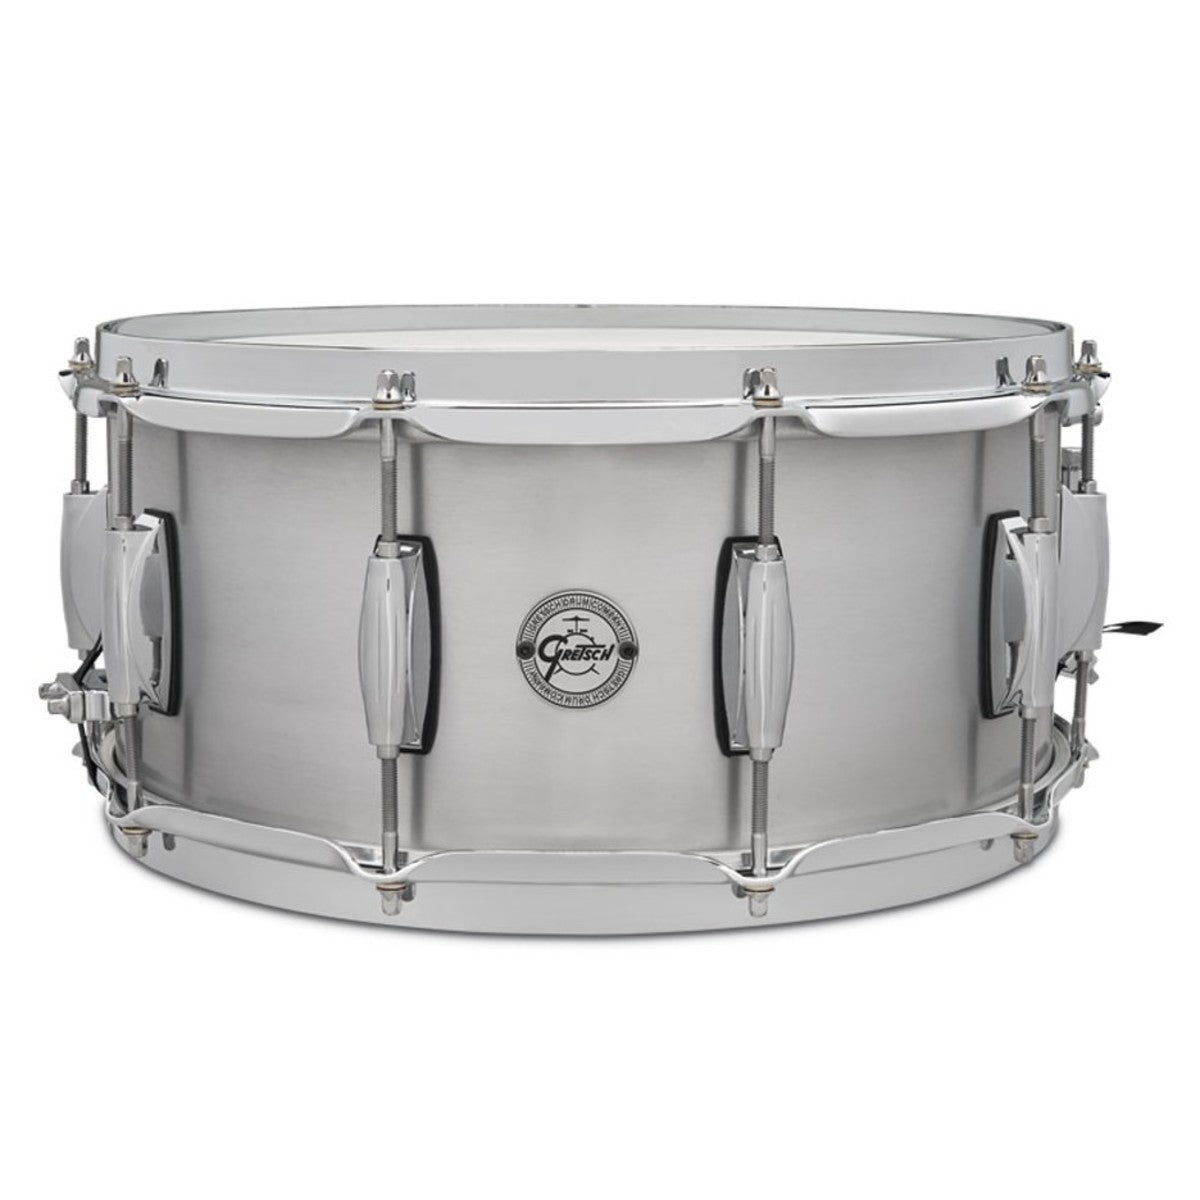 Gretsch "Full Range" 14"x6.5" Aluminum Snare Drum 'Grand Prix'